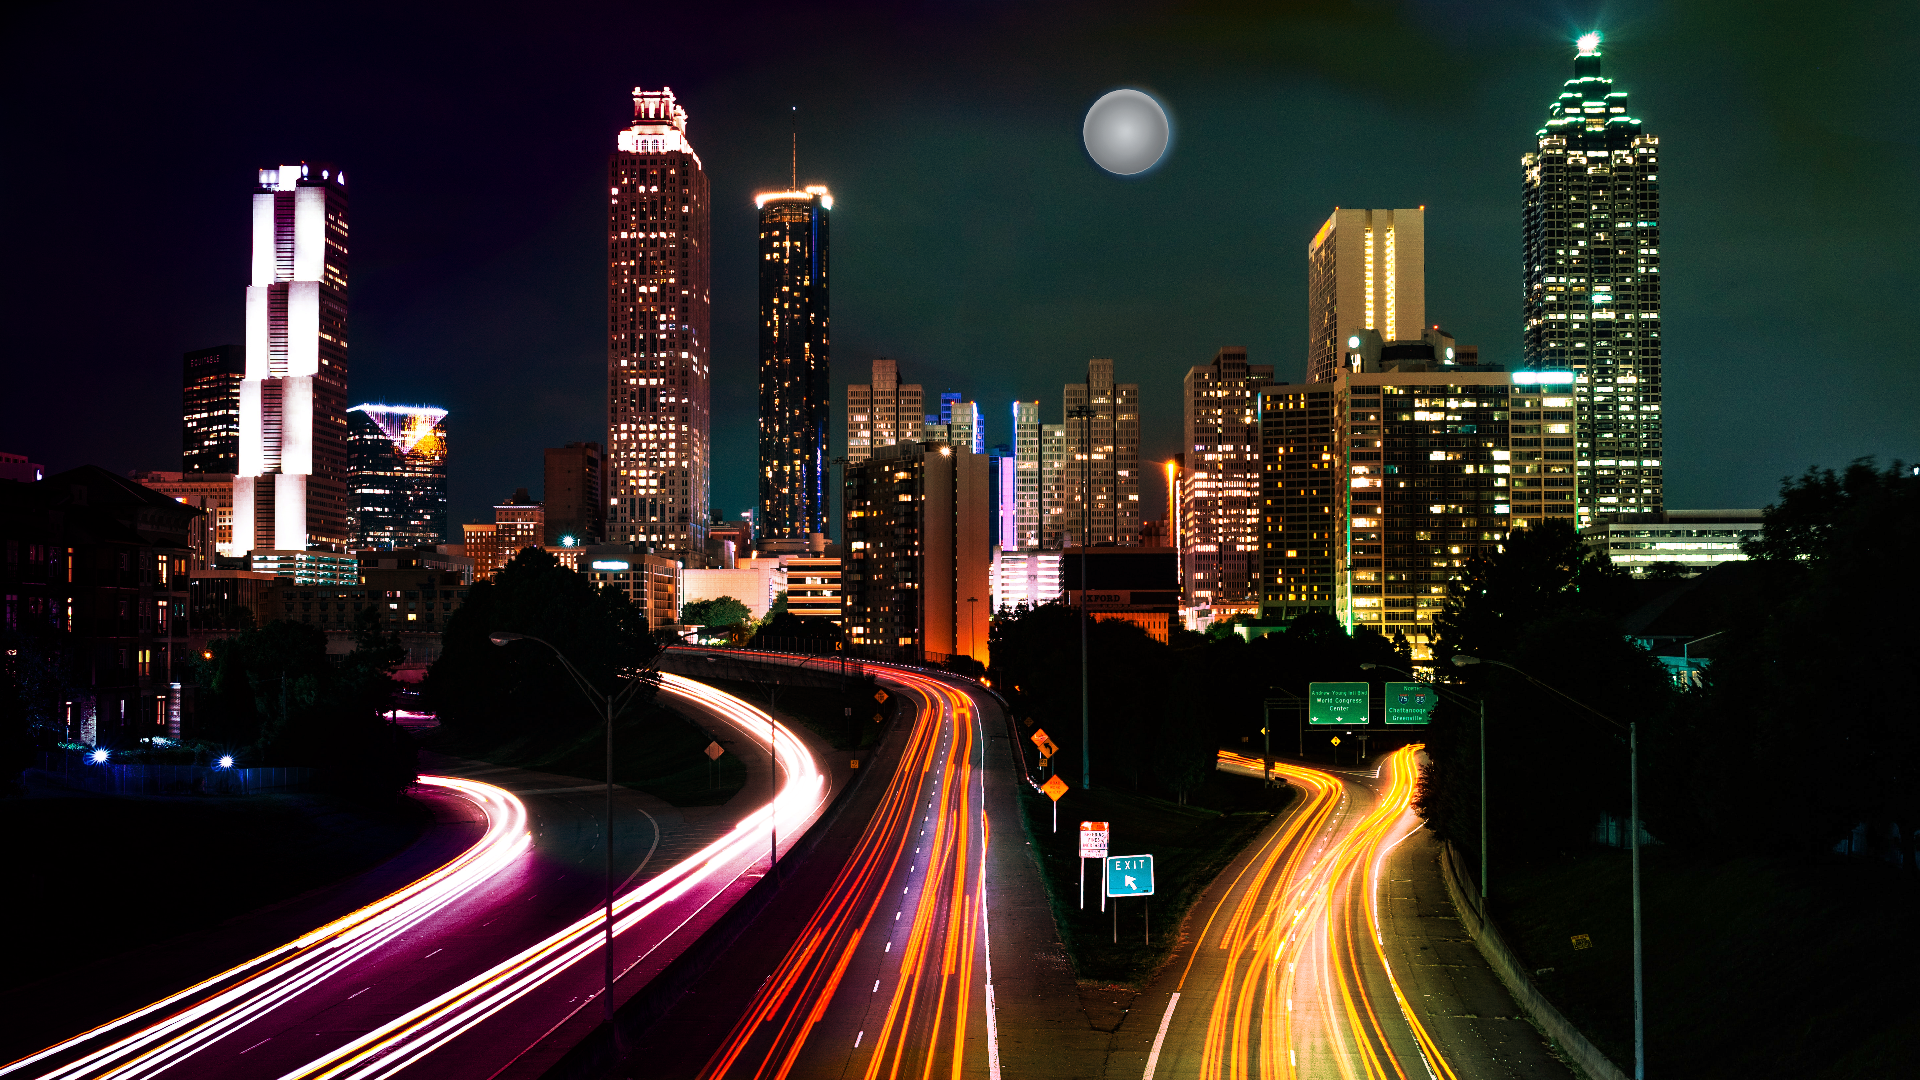 city lights 2 - vytvořil Henri Huotari s paint